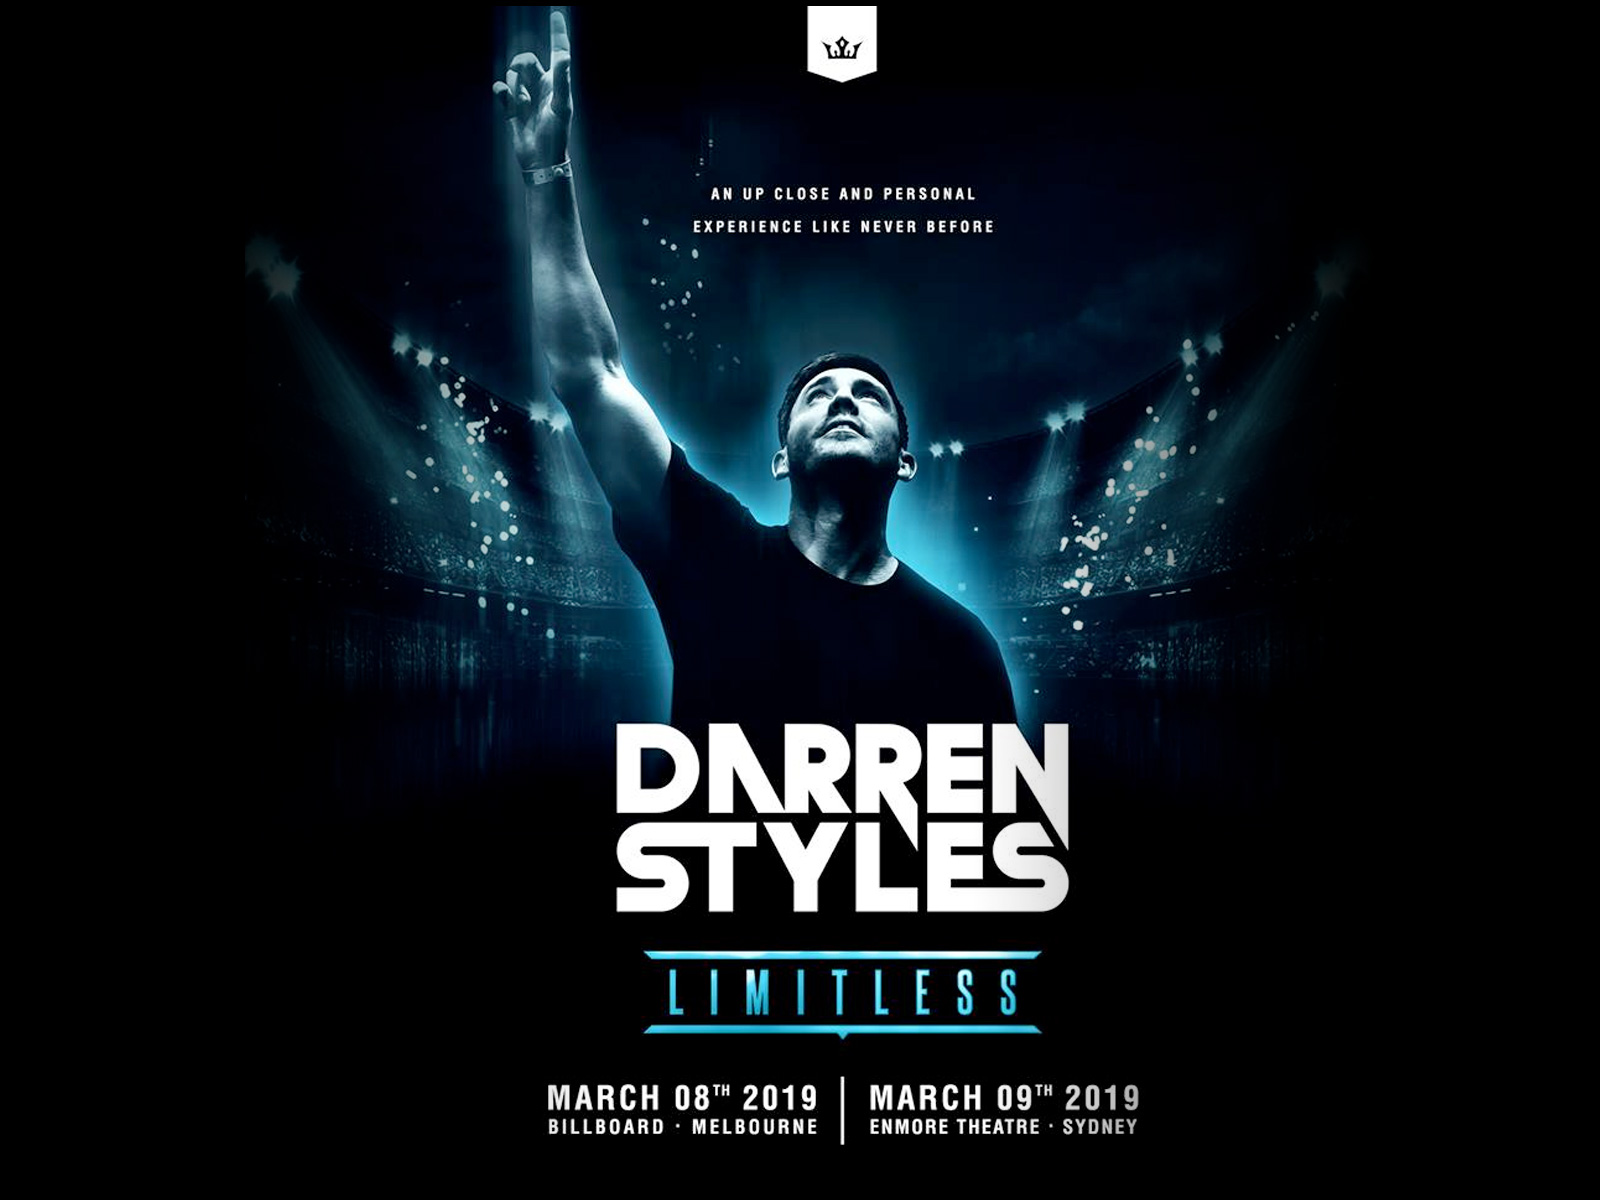 darren-styles-limitless-australian-tour-2019-oz-edm